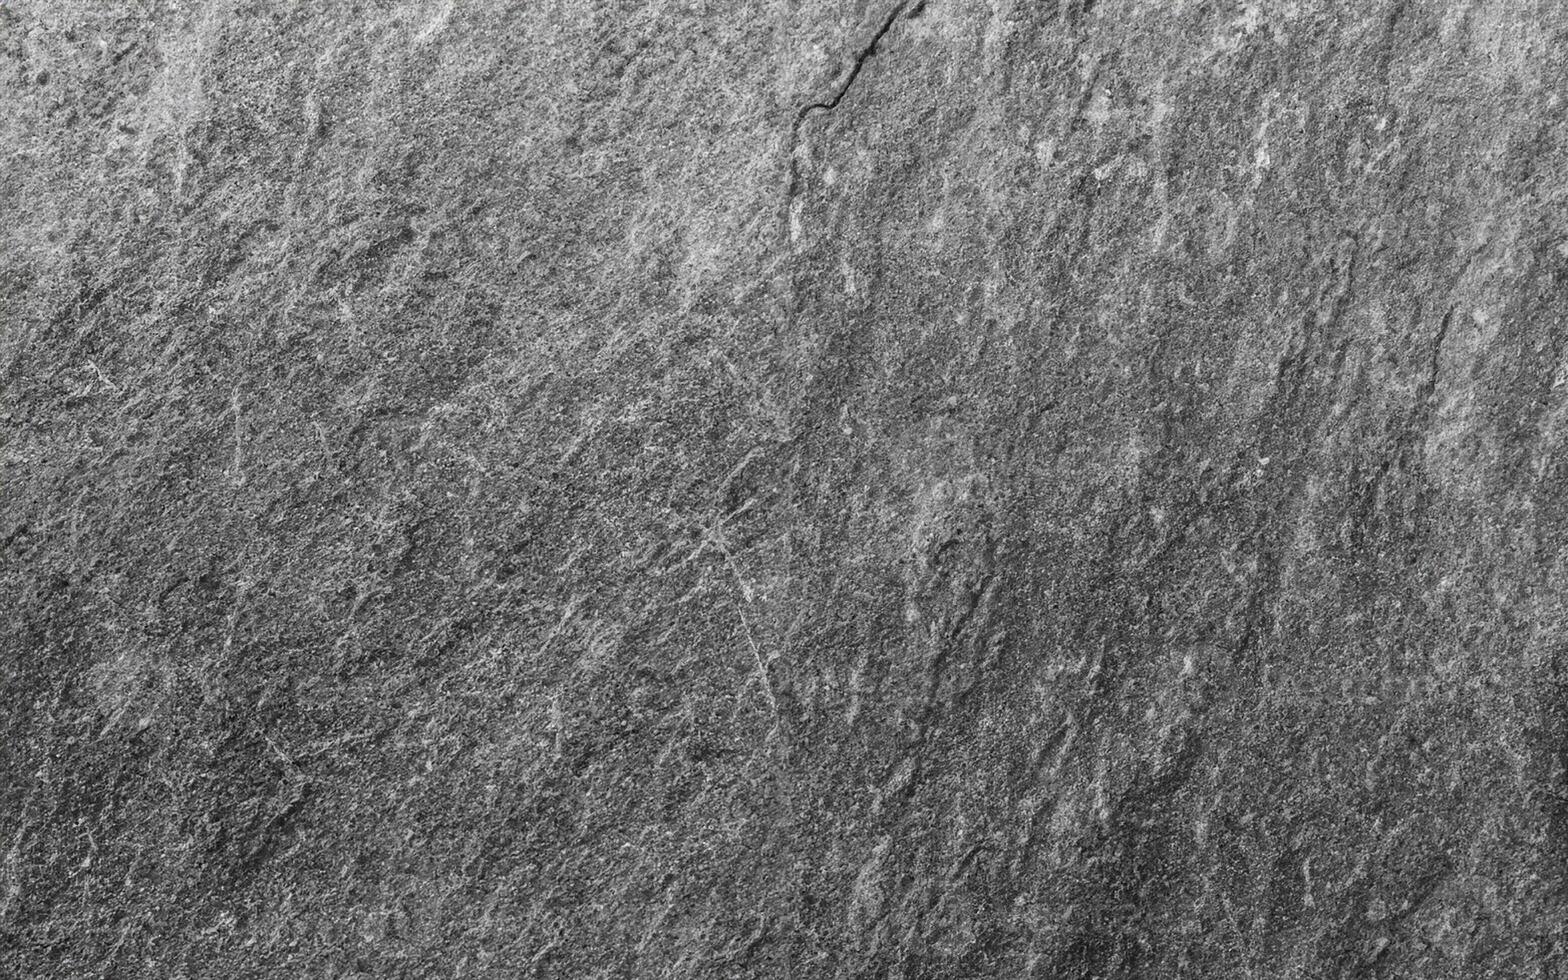 Black stone texture surface photo